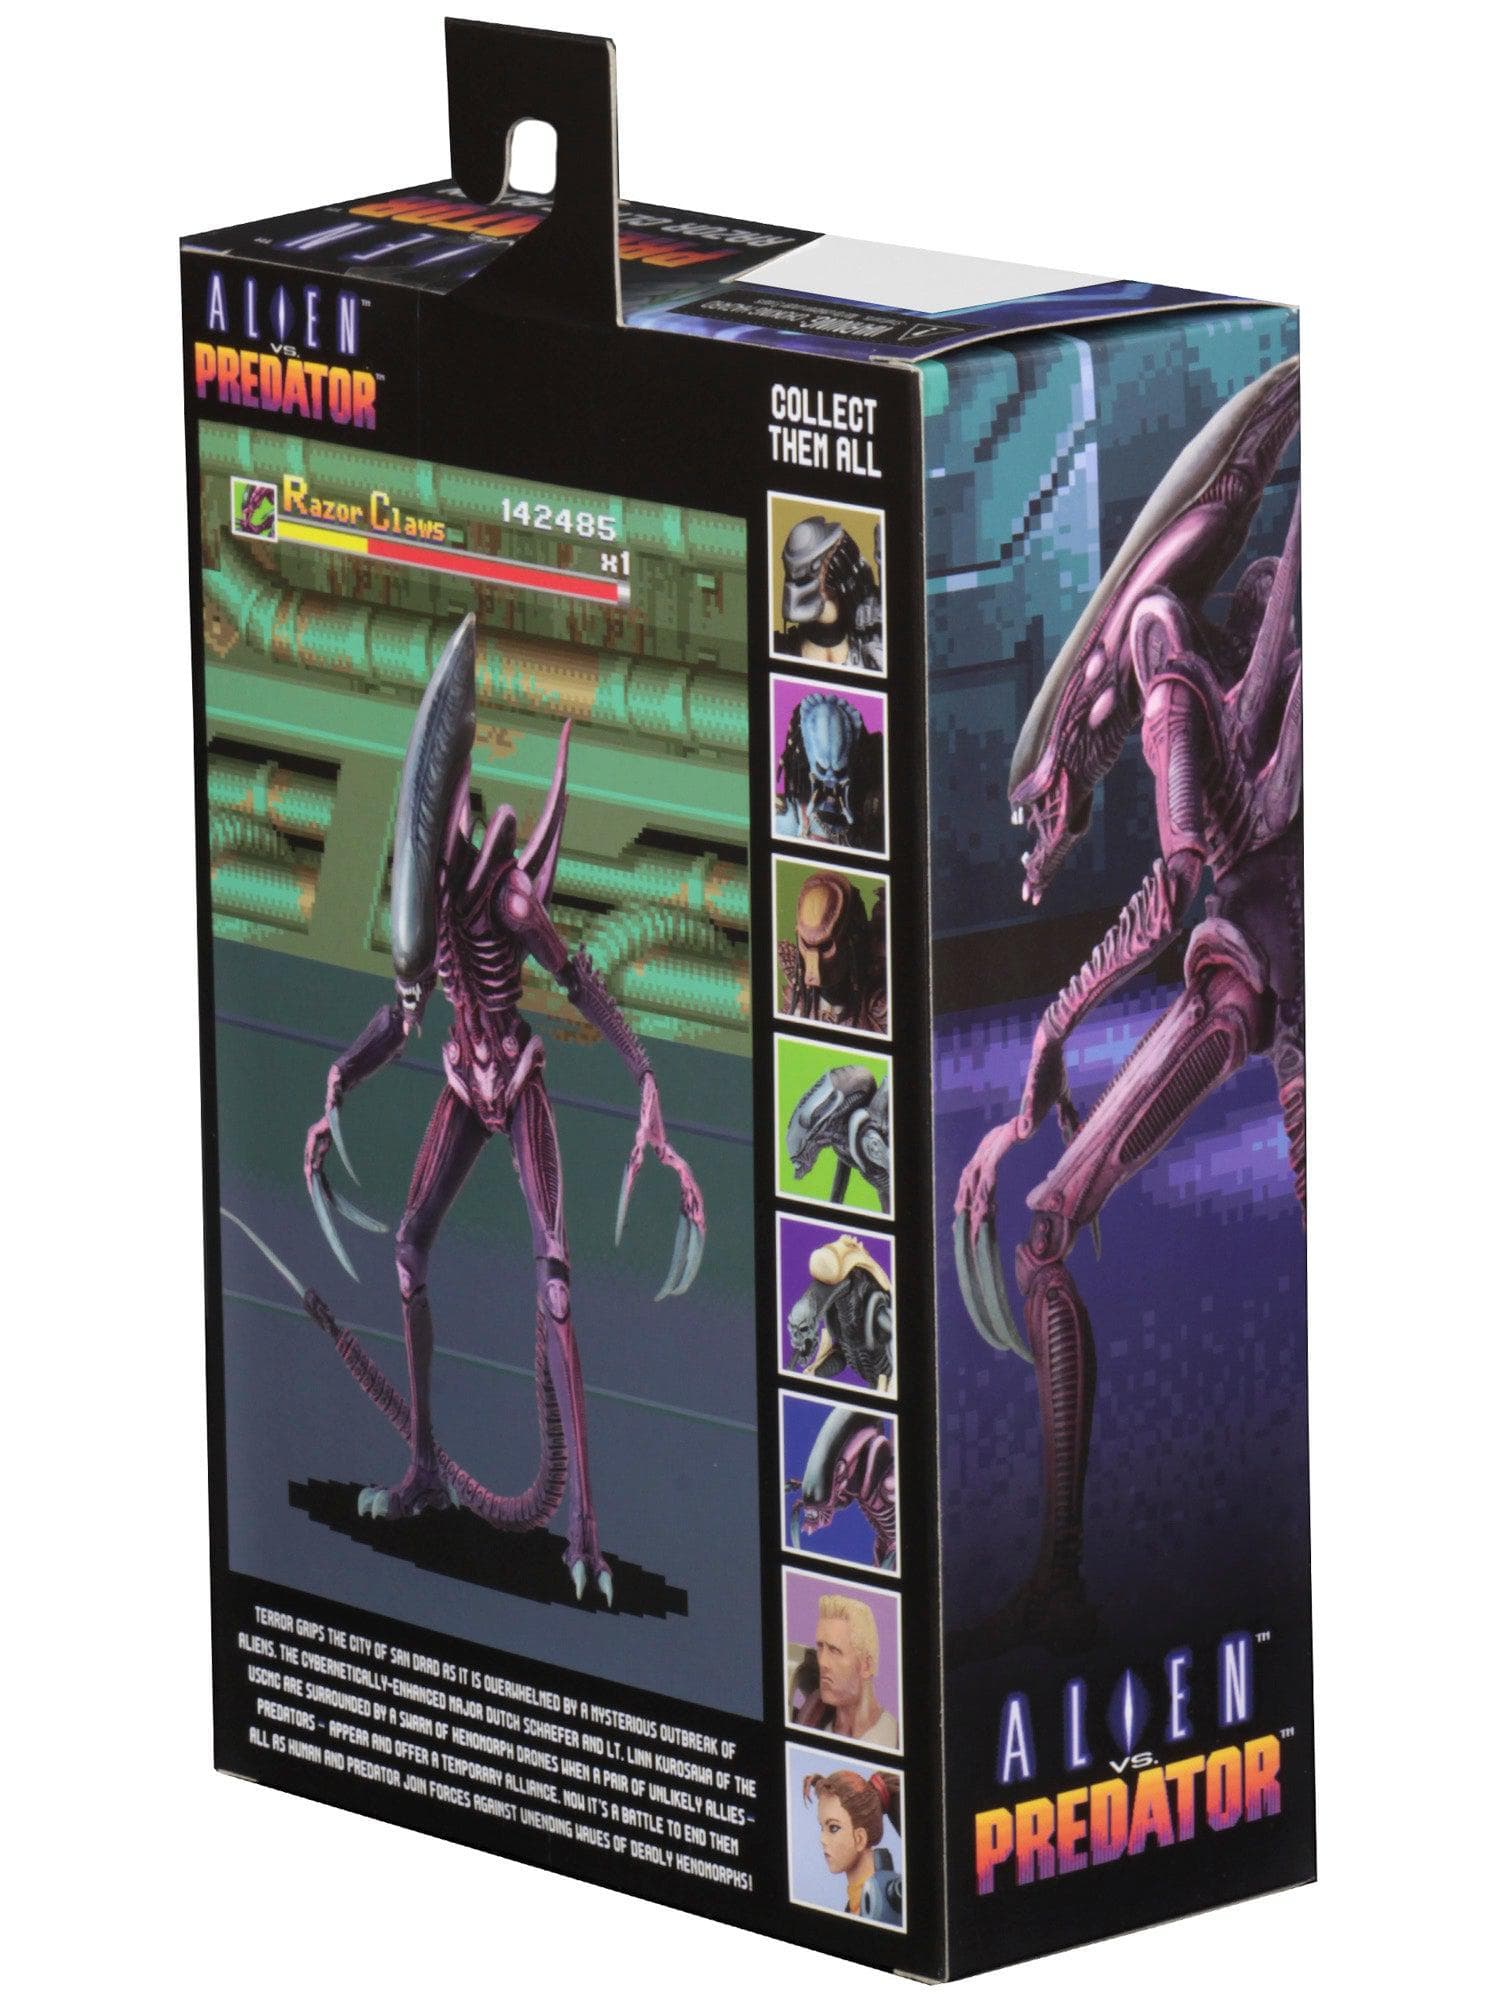 NECA - Alien vs Predator - 7" Scale Action Figure - Arcade Razor Claws Alien - costumes.com